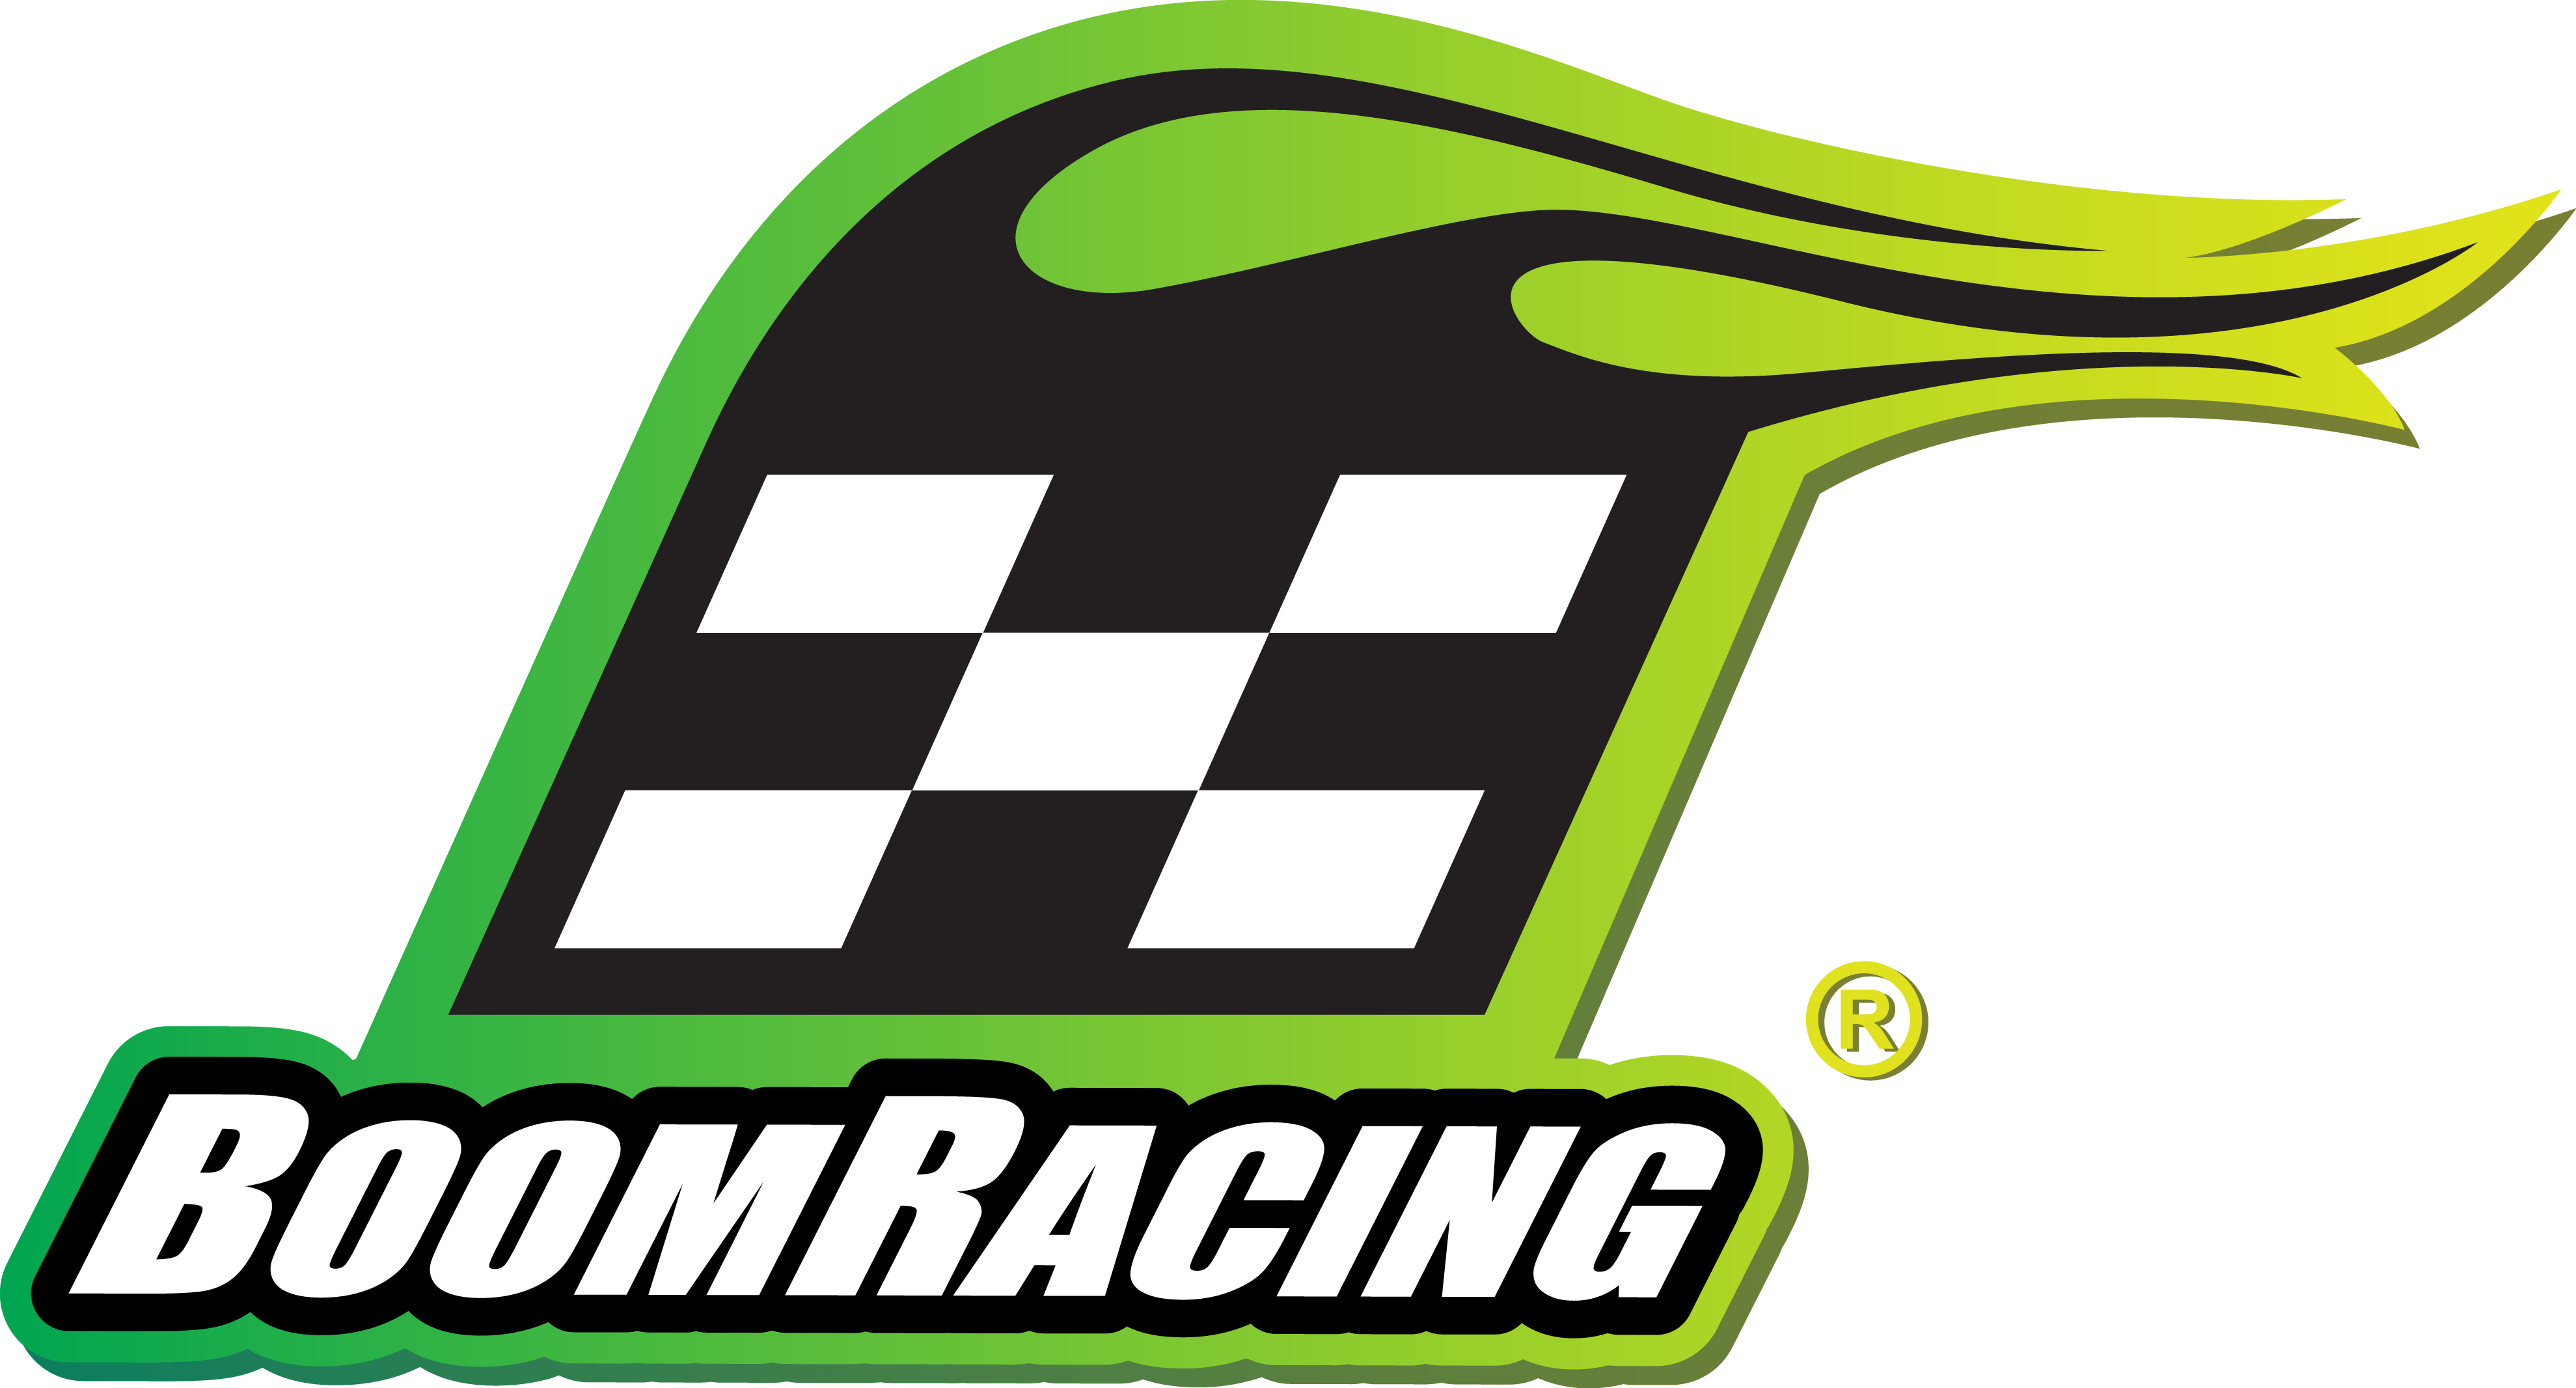 Boomracing - Boom Racing Team Sticker Decal 24cm X 21cm (3958x2132)